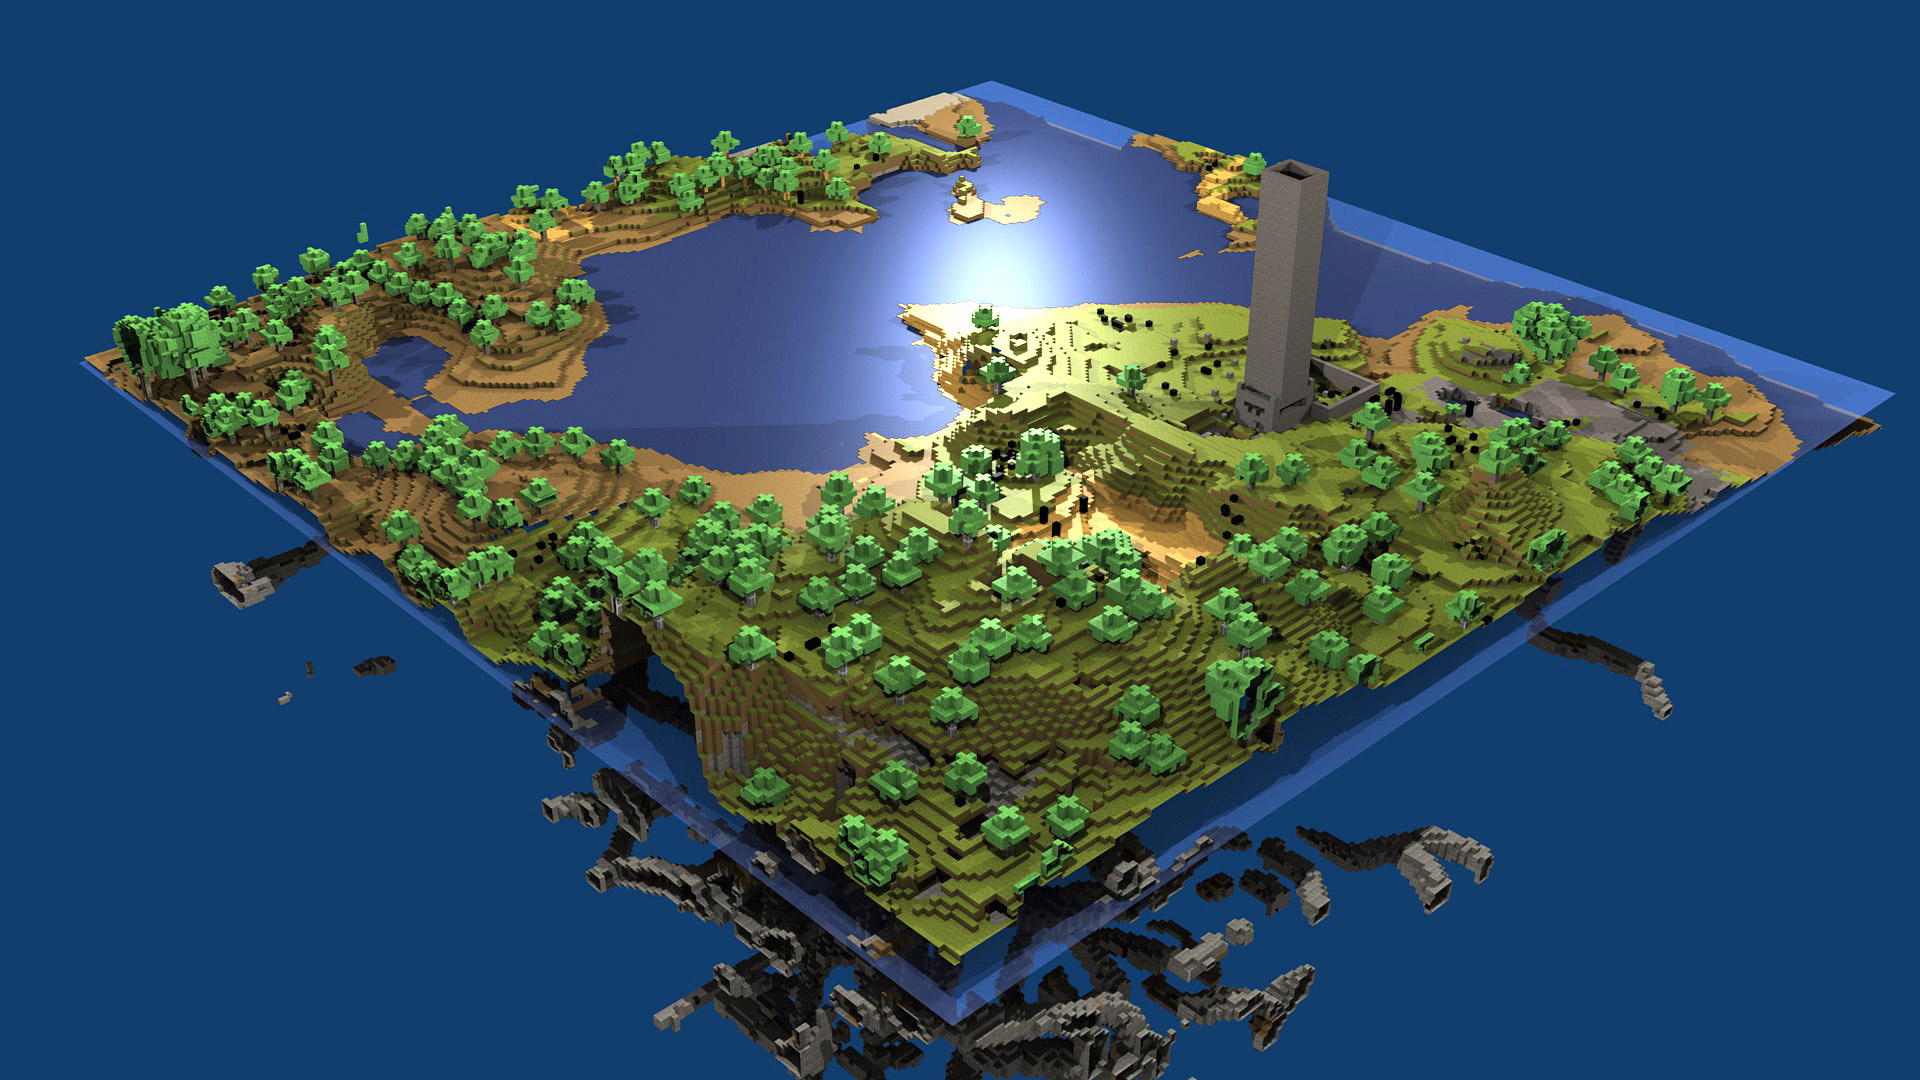 Gallery For Gt Gaming Desktop Background Minecraft